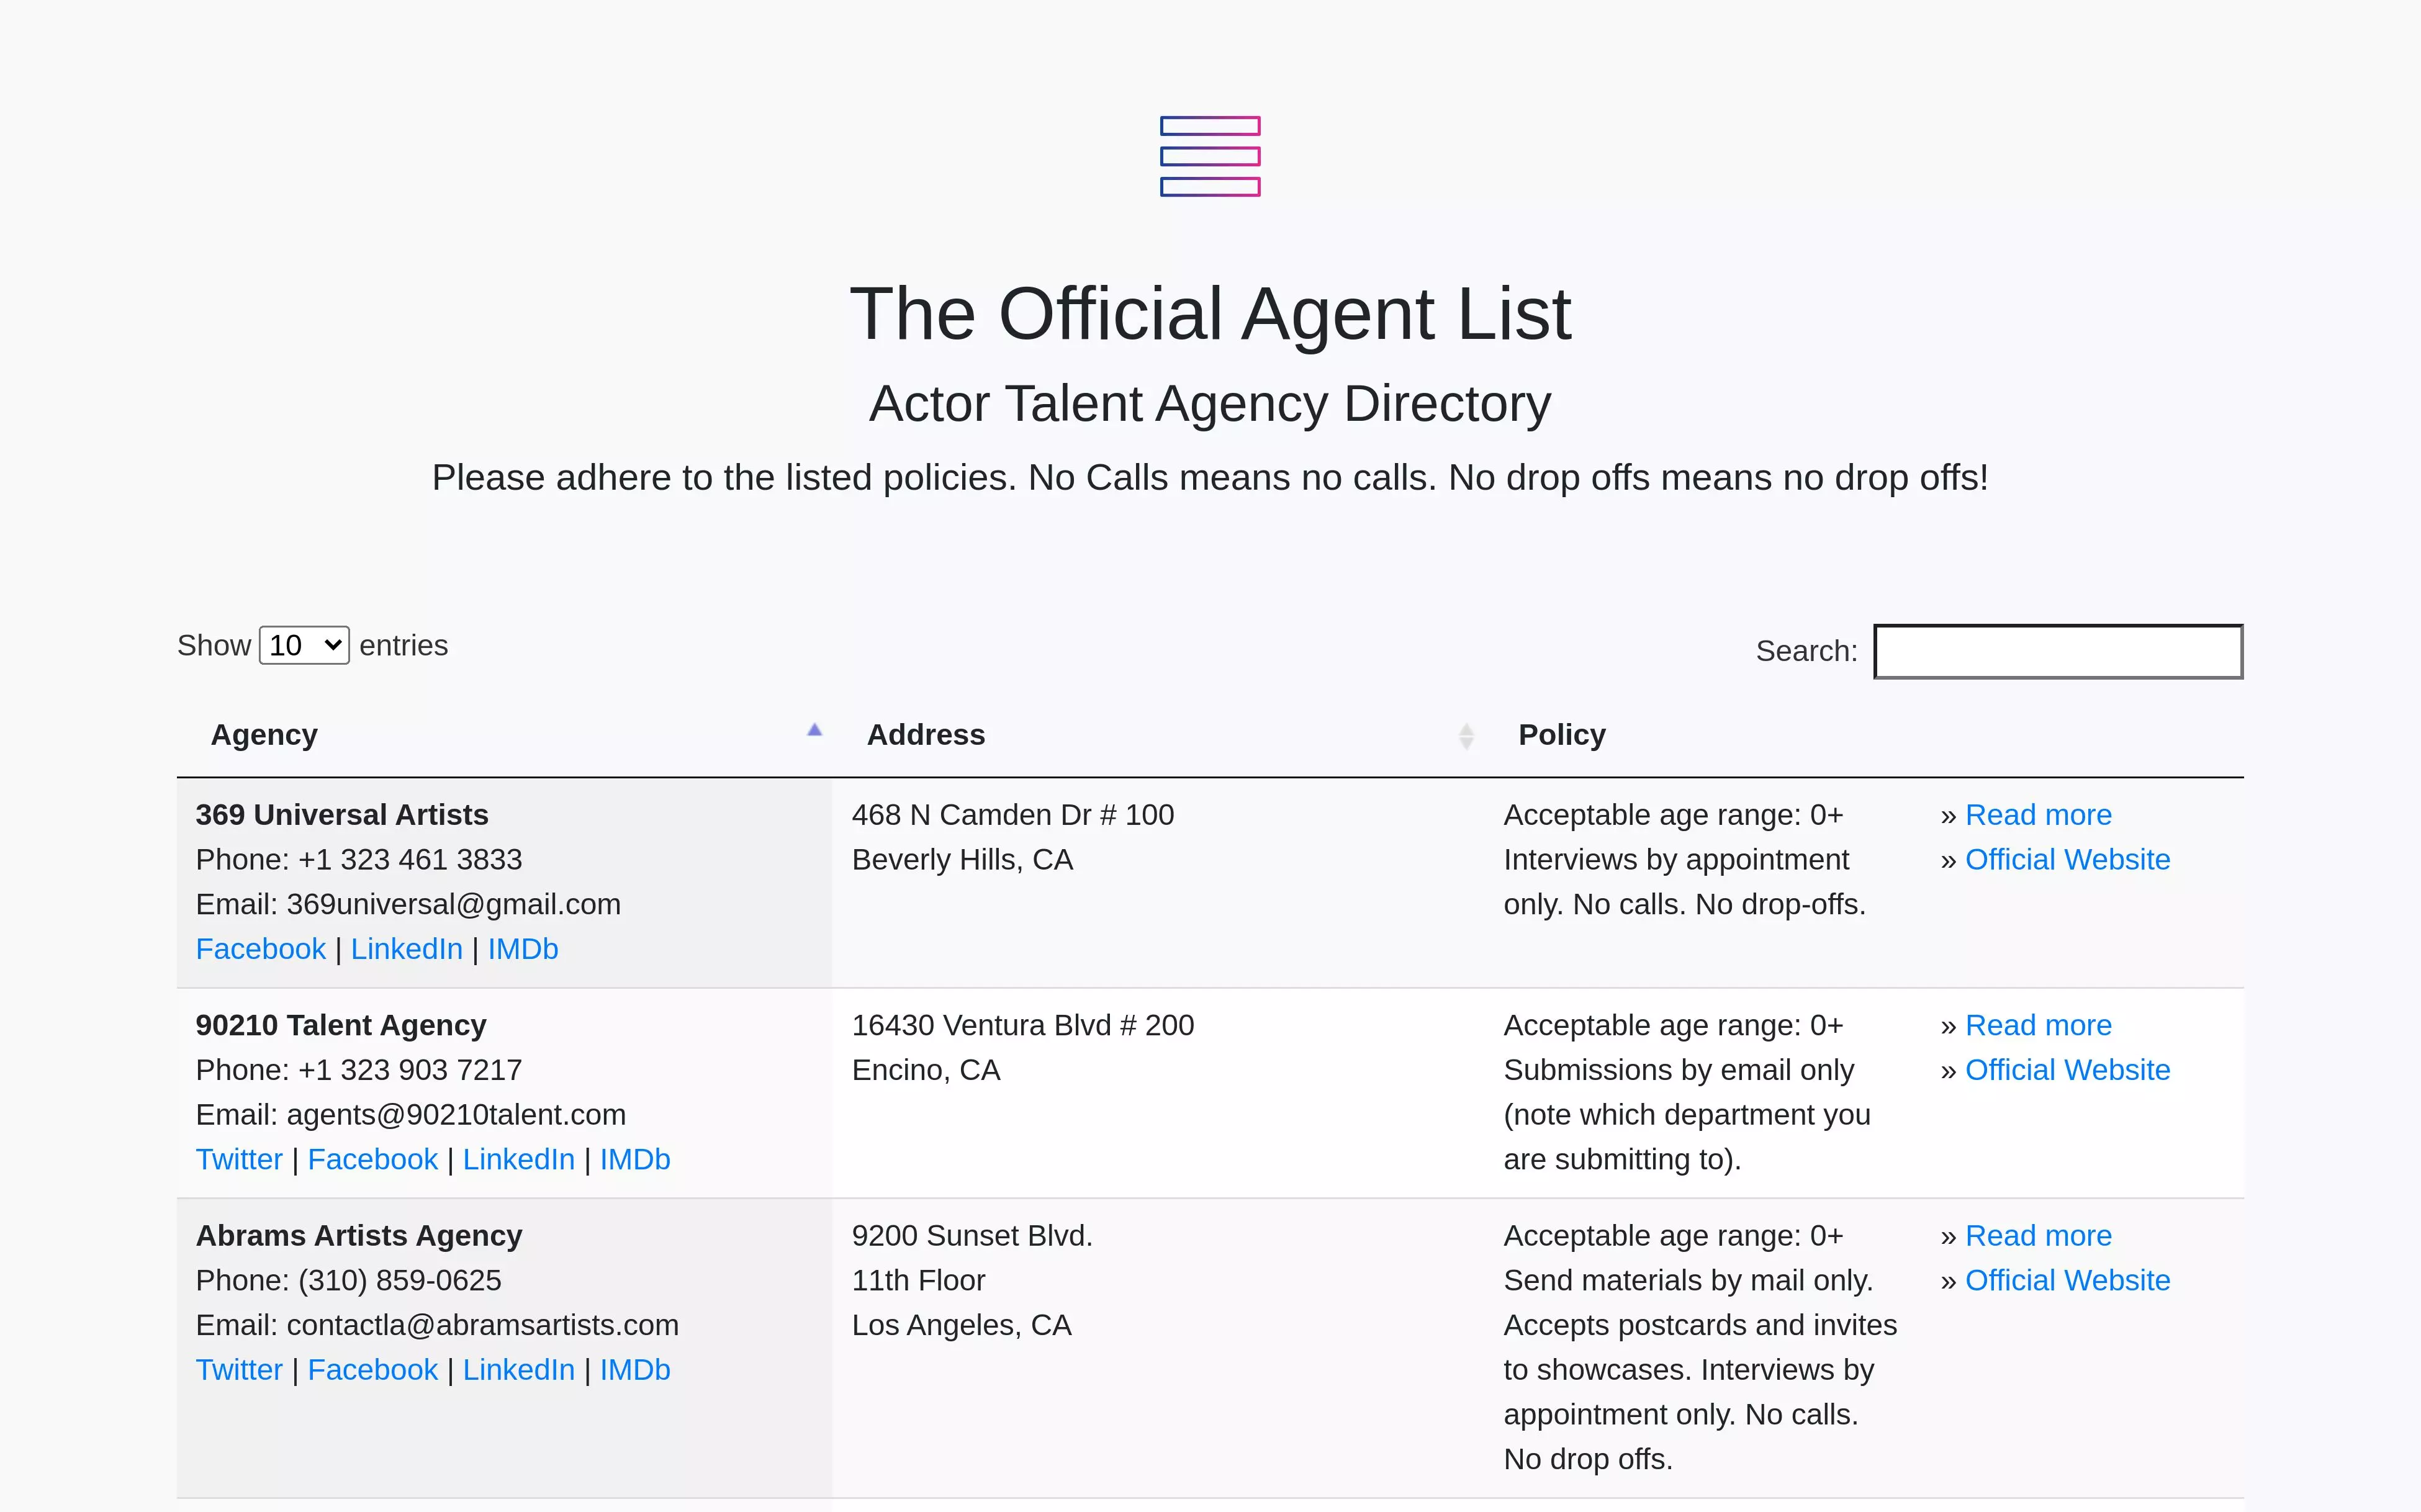 Agent List